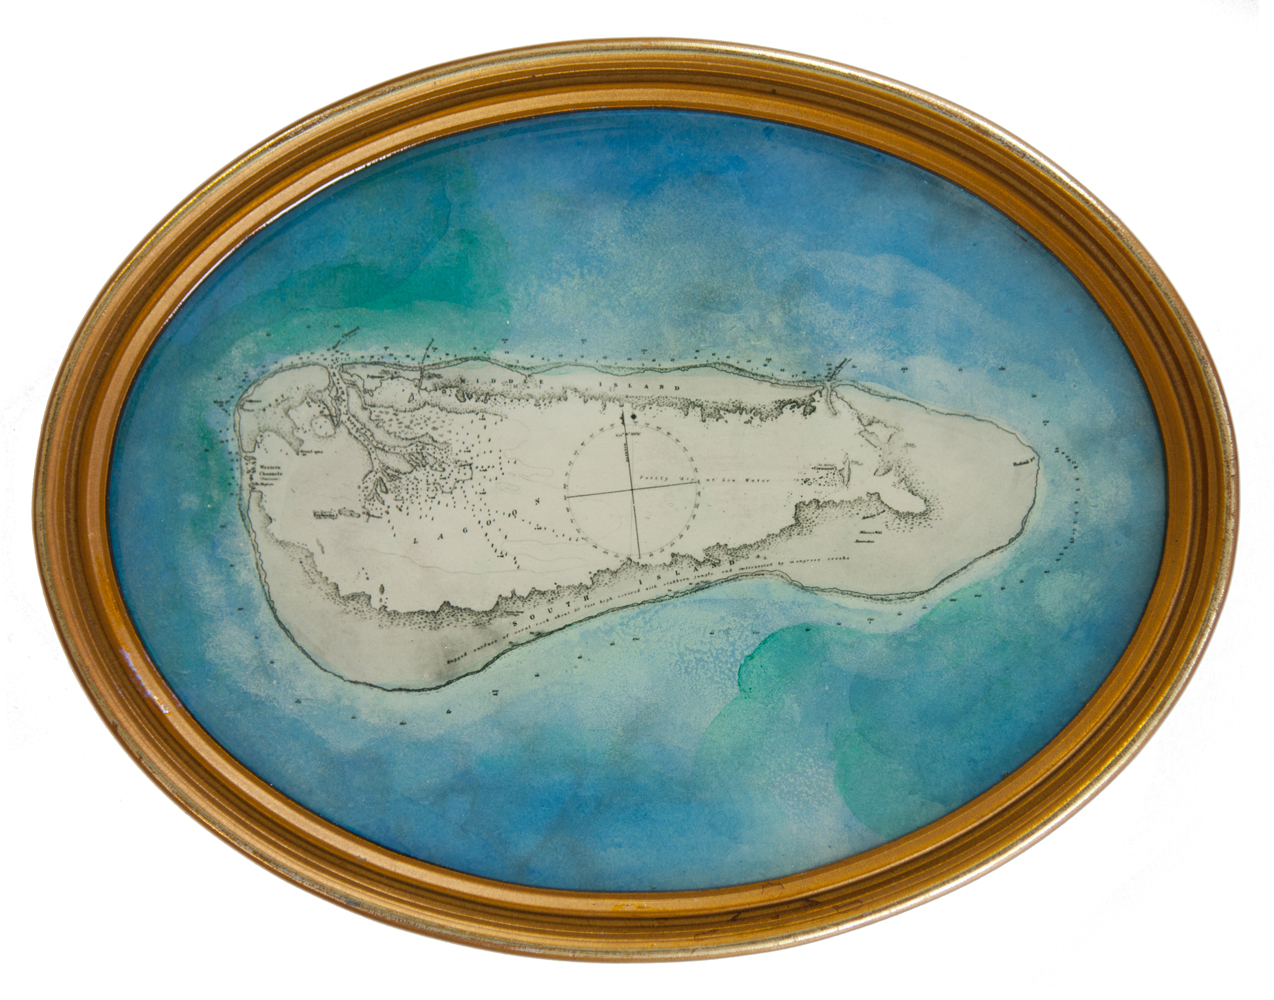  Shiraz Bayjoo    Aldabra No.2     (Ocean Miniatures series)  Acrylic, resin, wood  22.5 x 17 x 2 cm  2016 